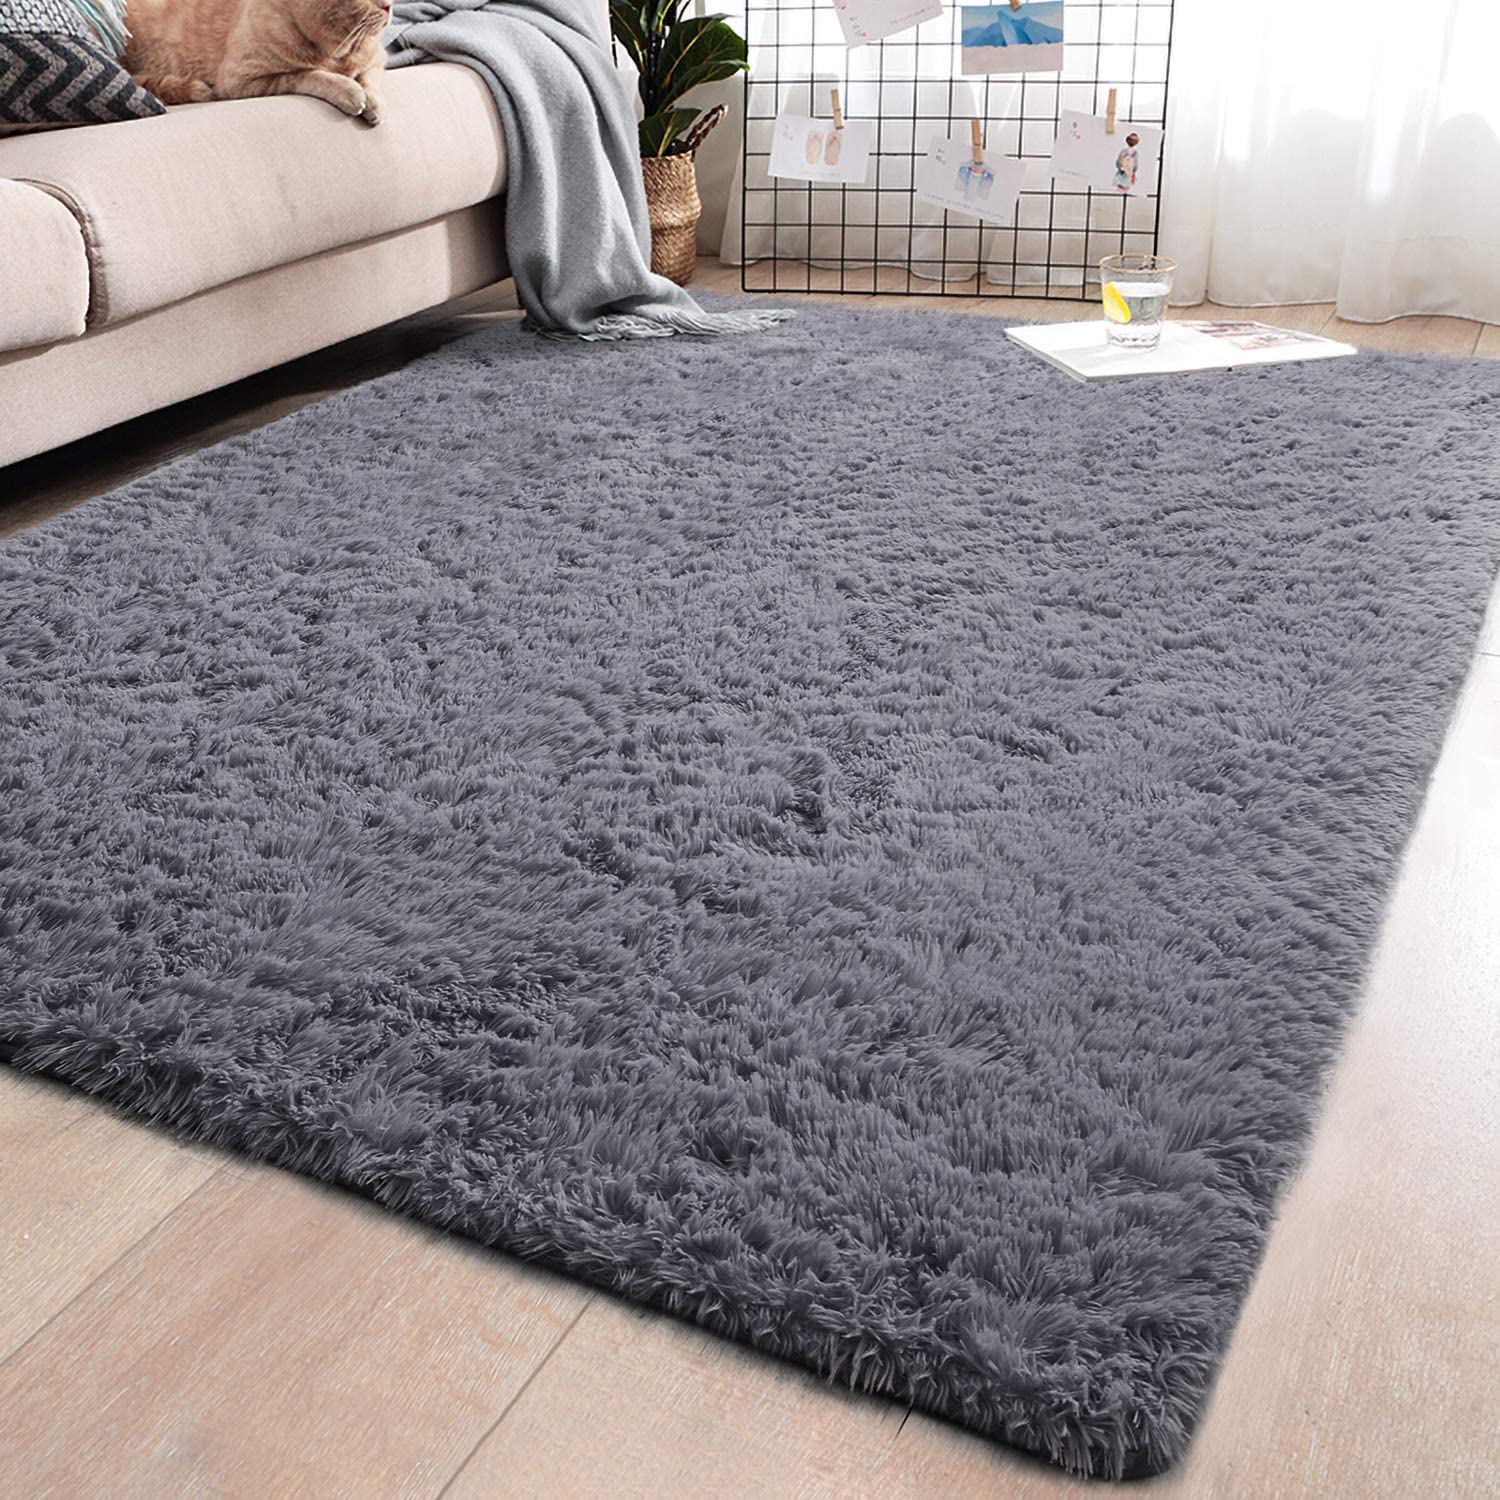 Stylish Anti-Skid Fluffy Rug Shaggy Area Living Room Carpet Floor Mat Soft Gift 